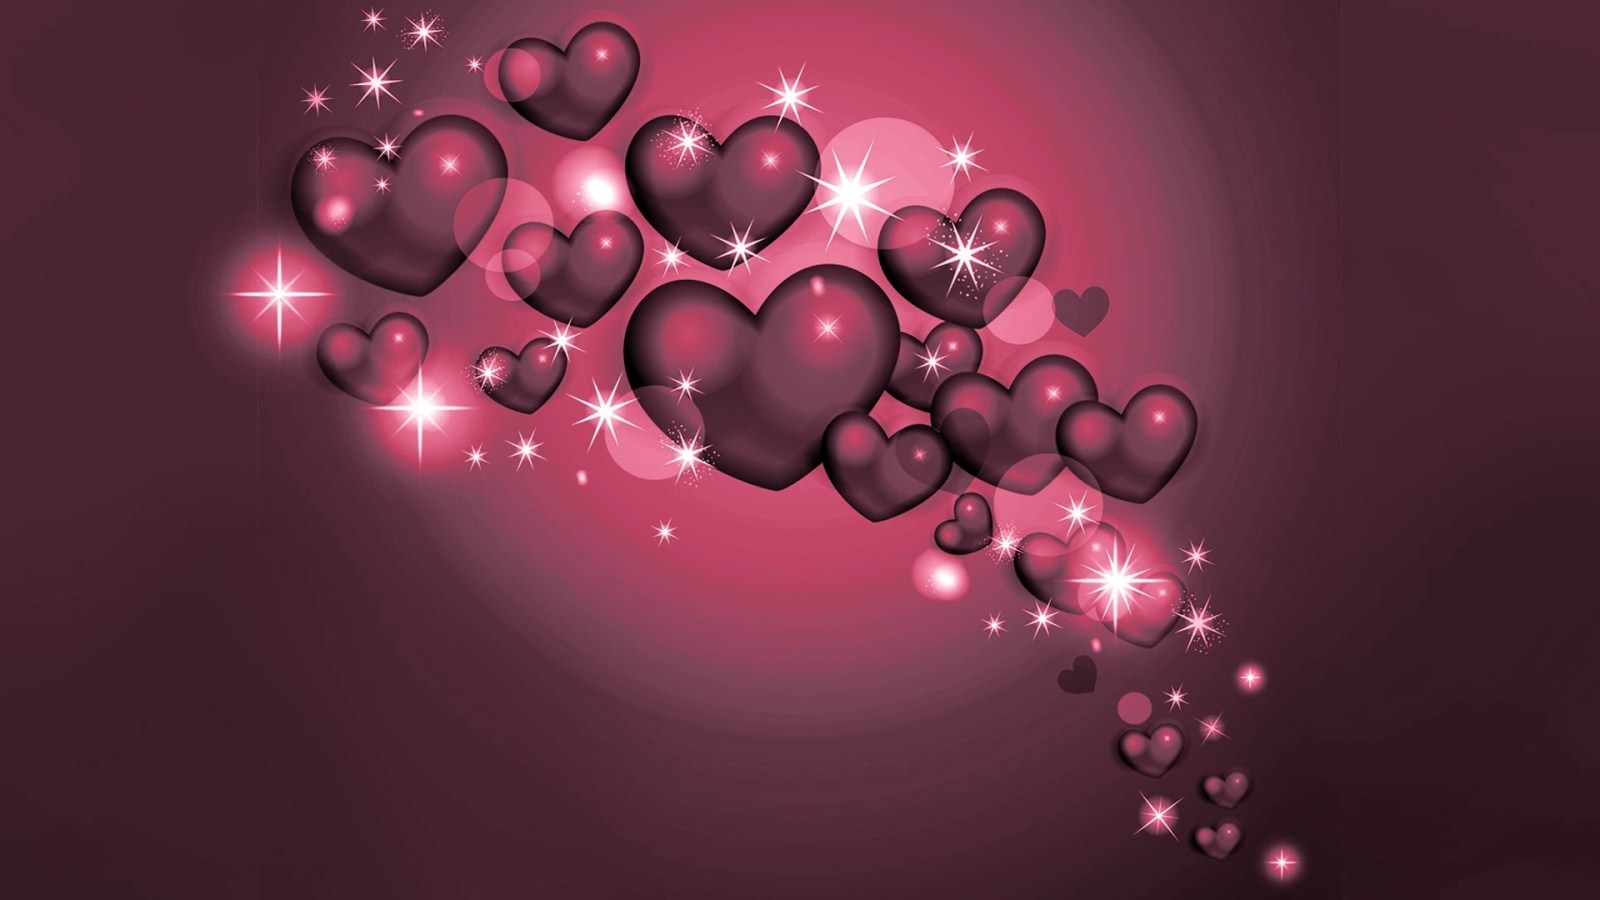 love heart 3d hd wallpapers 1080p download 1600x900